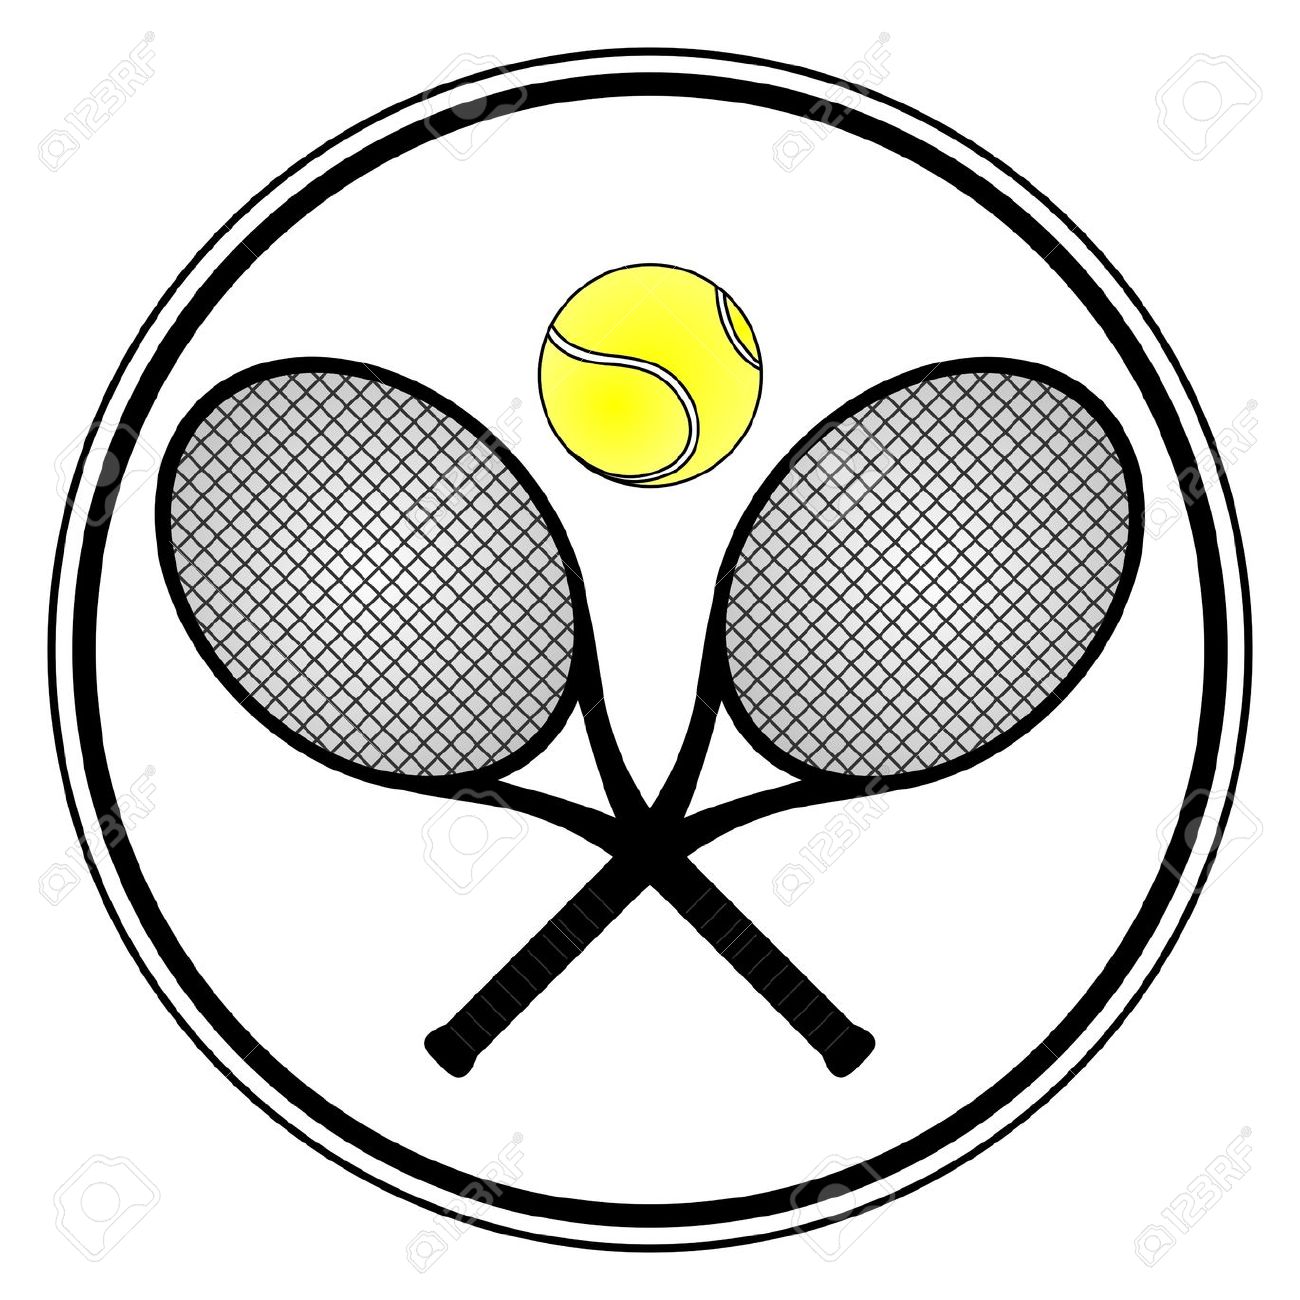 Tennis Racket Drawing at GetDrawings | Free download